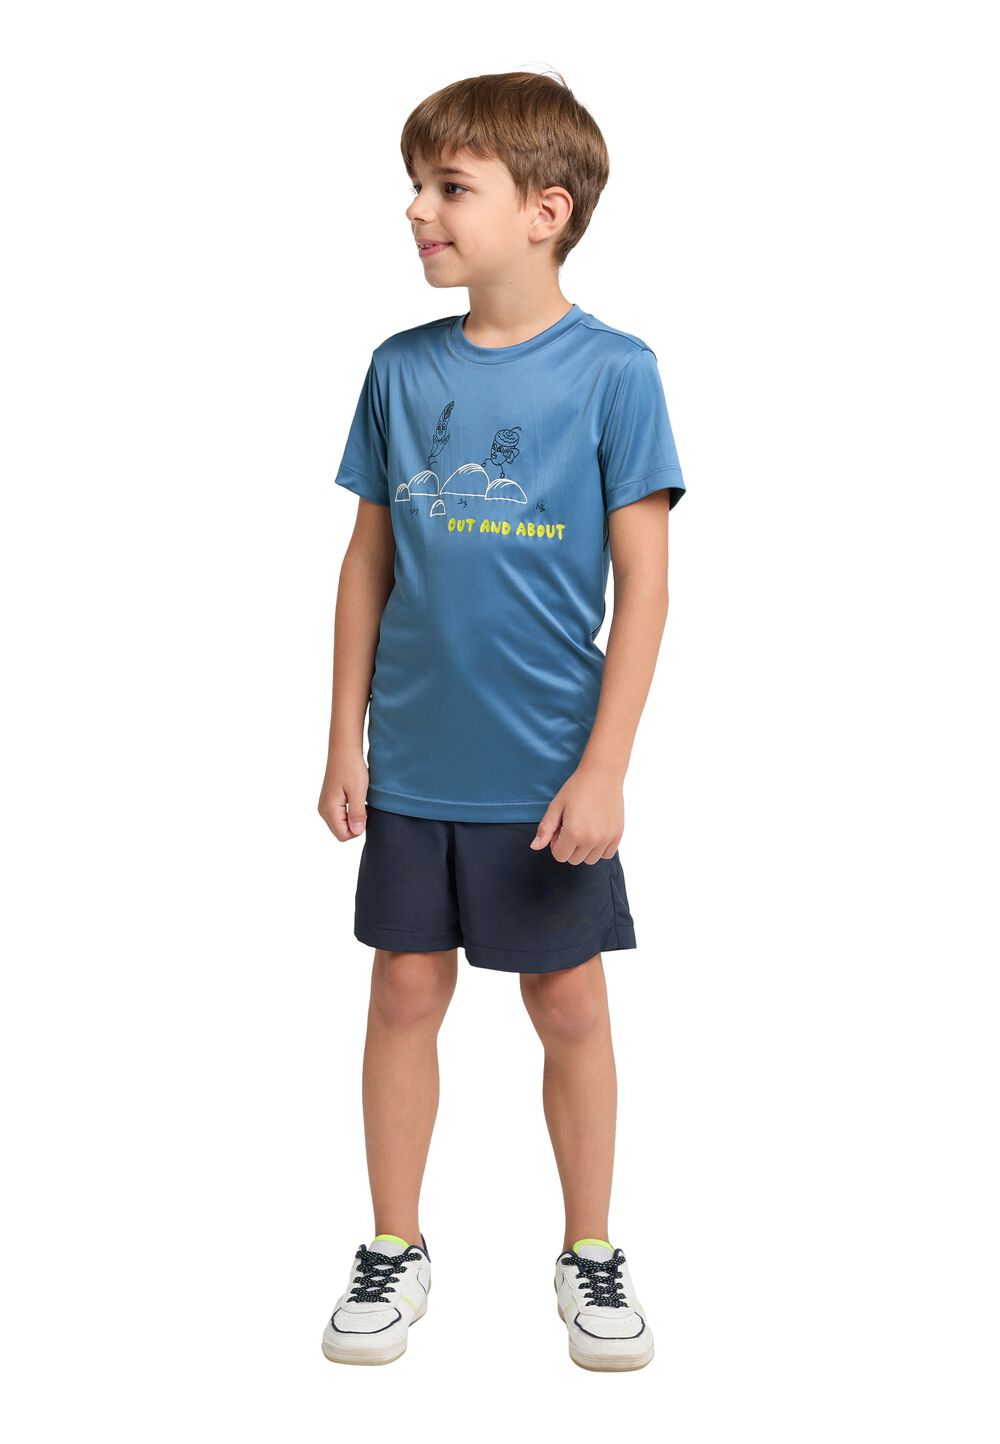 Jack Wolfskin OUT AND About T-Shirt Kids Functioneel shirt Kinderen 164 elemental blue elemental blue